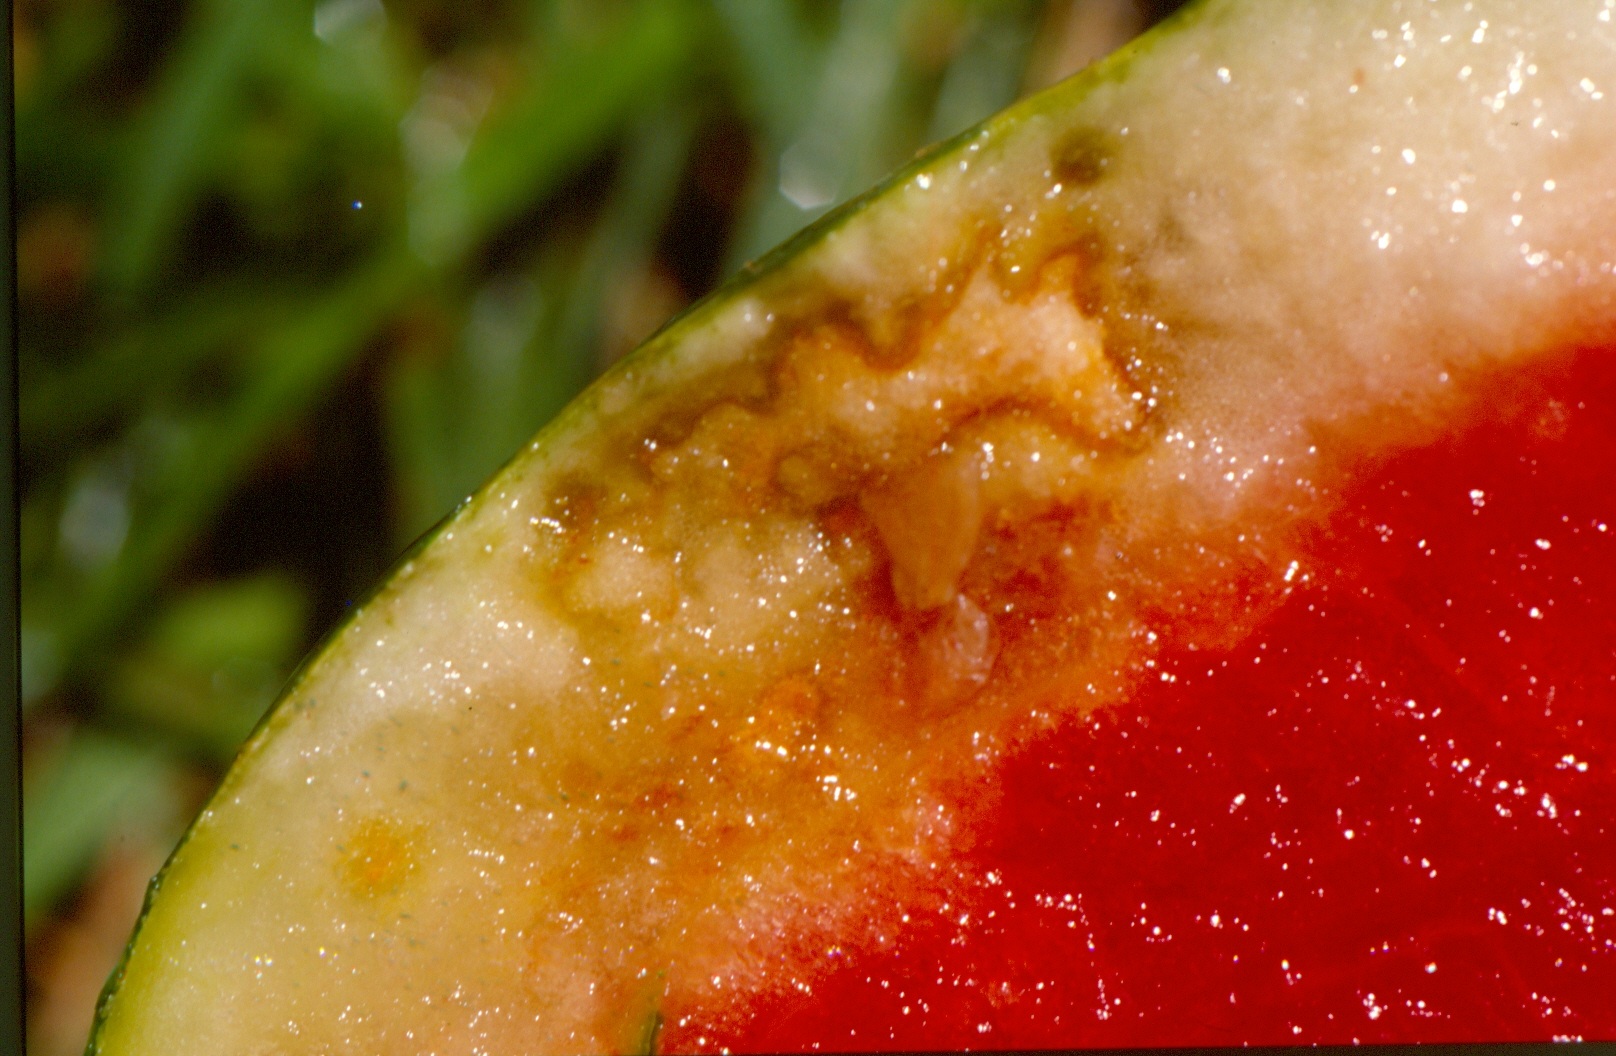 Figure 2. Rind necrosis of watermelon